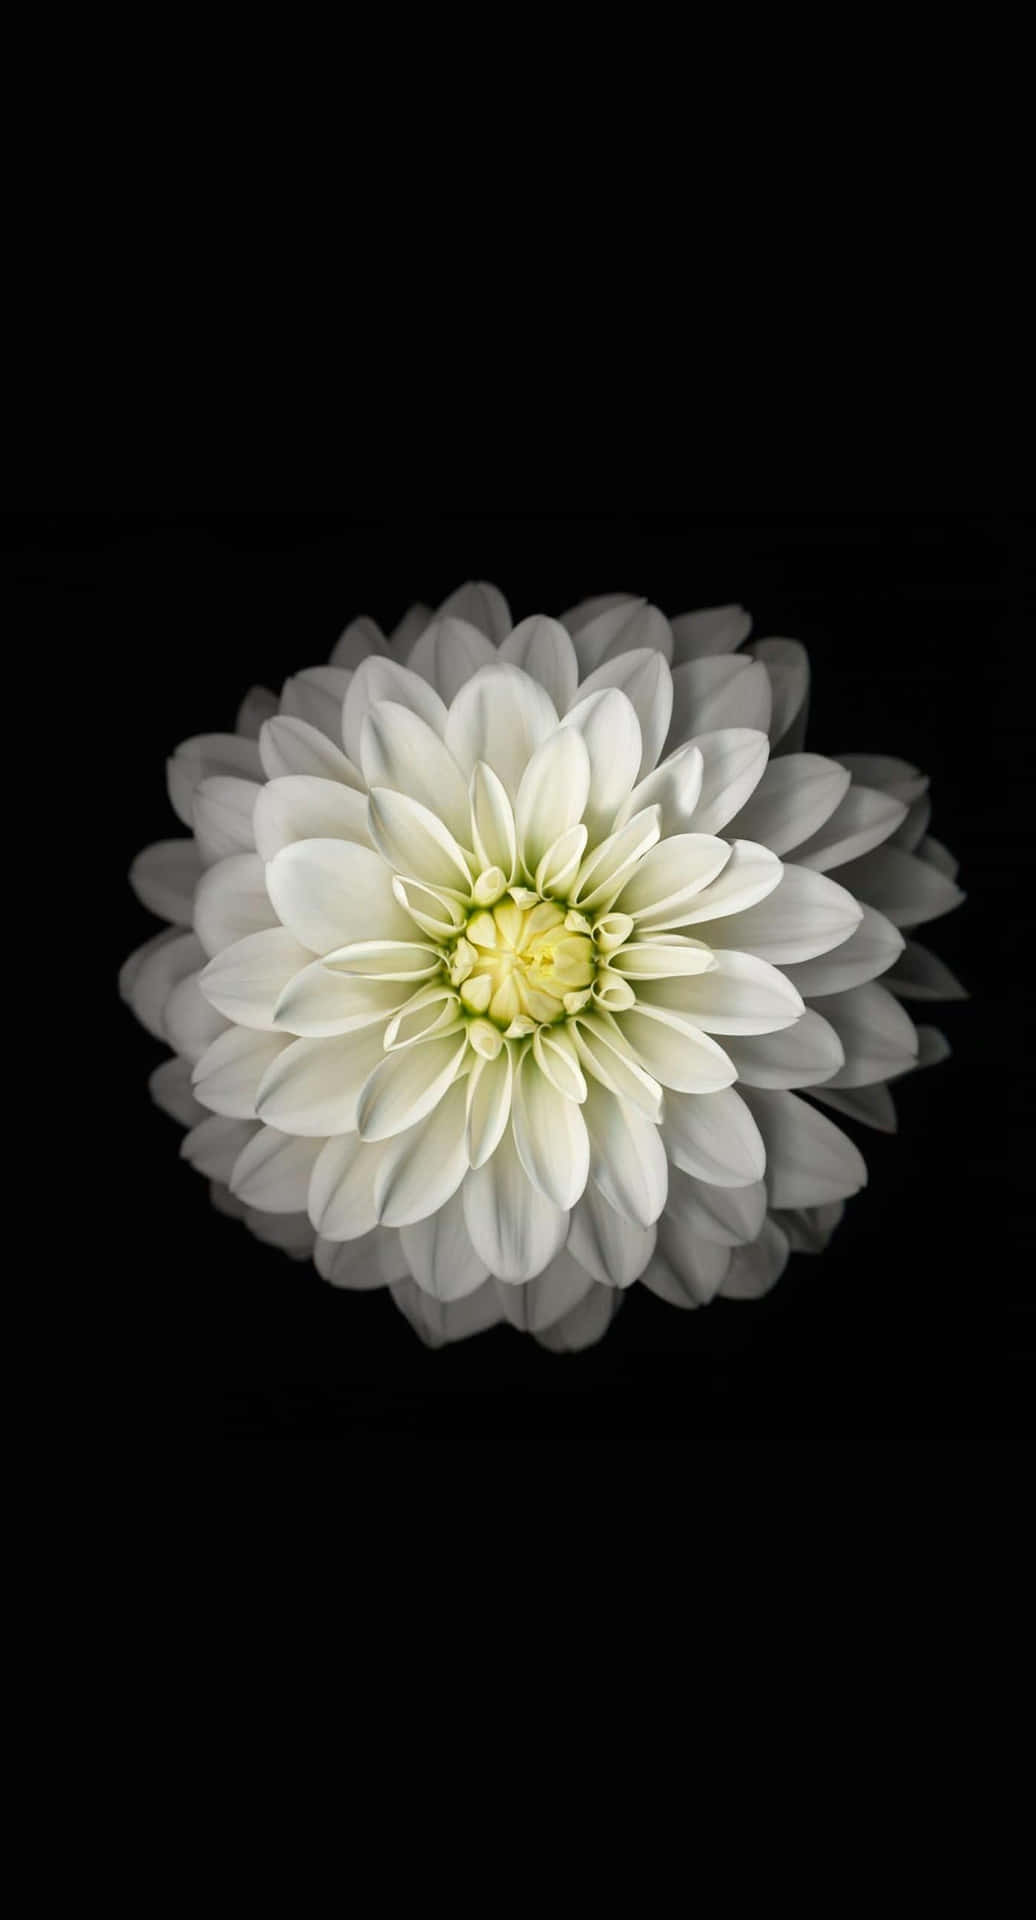 Flower Iphone White Dahlia Pinnata Picture